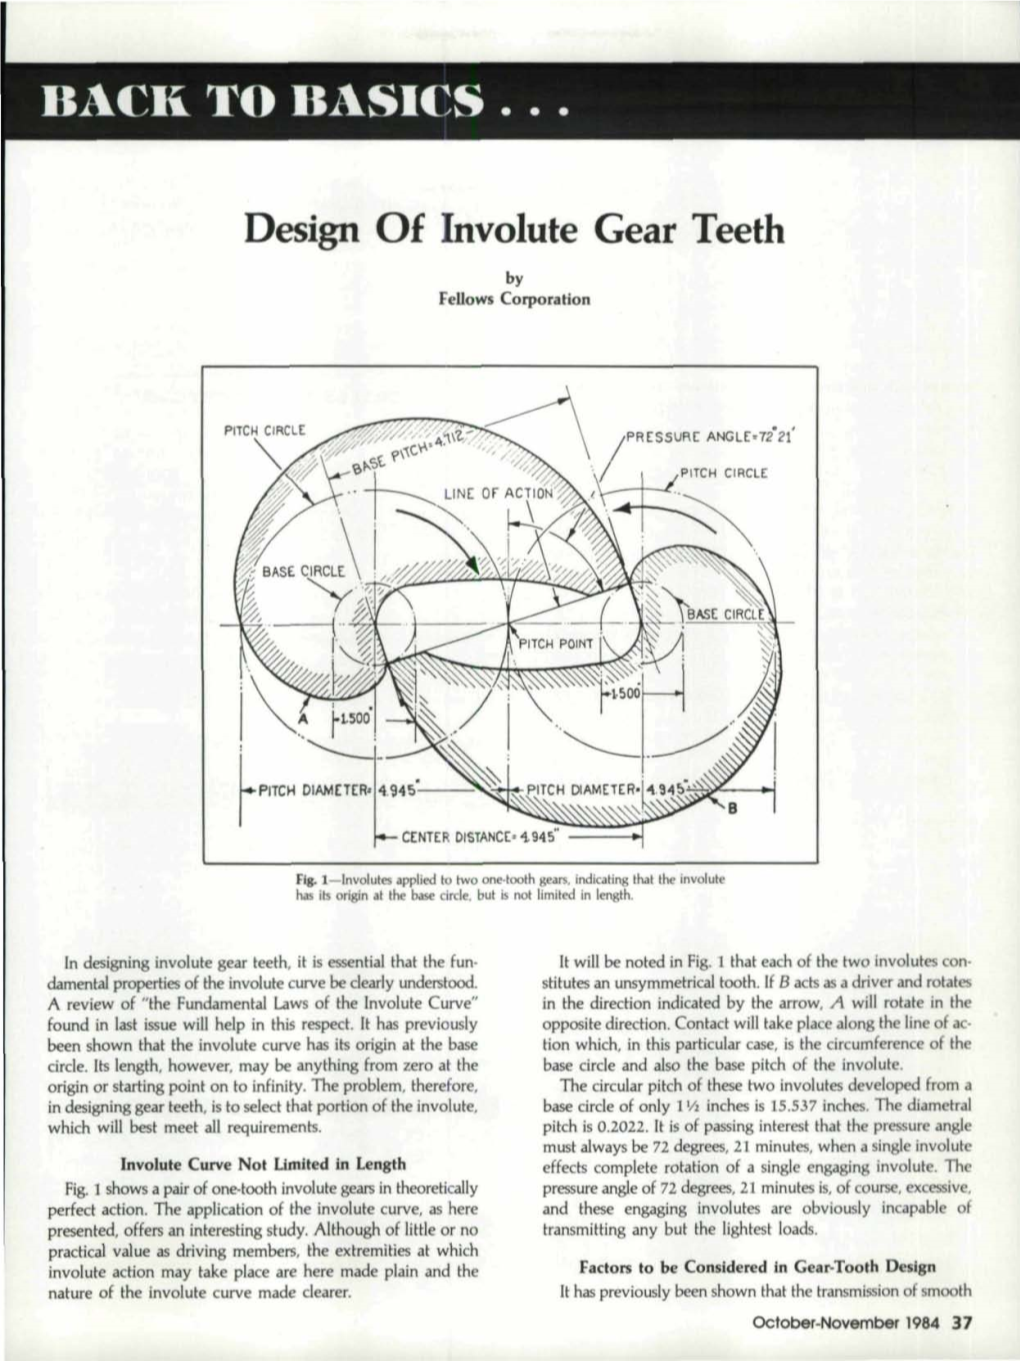 Design of Involute Gear Teeth